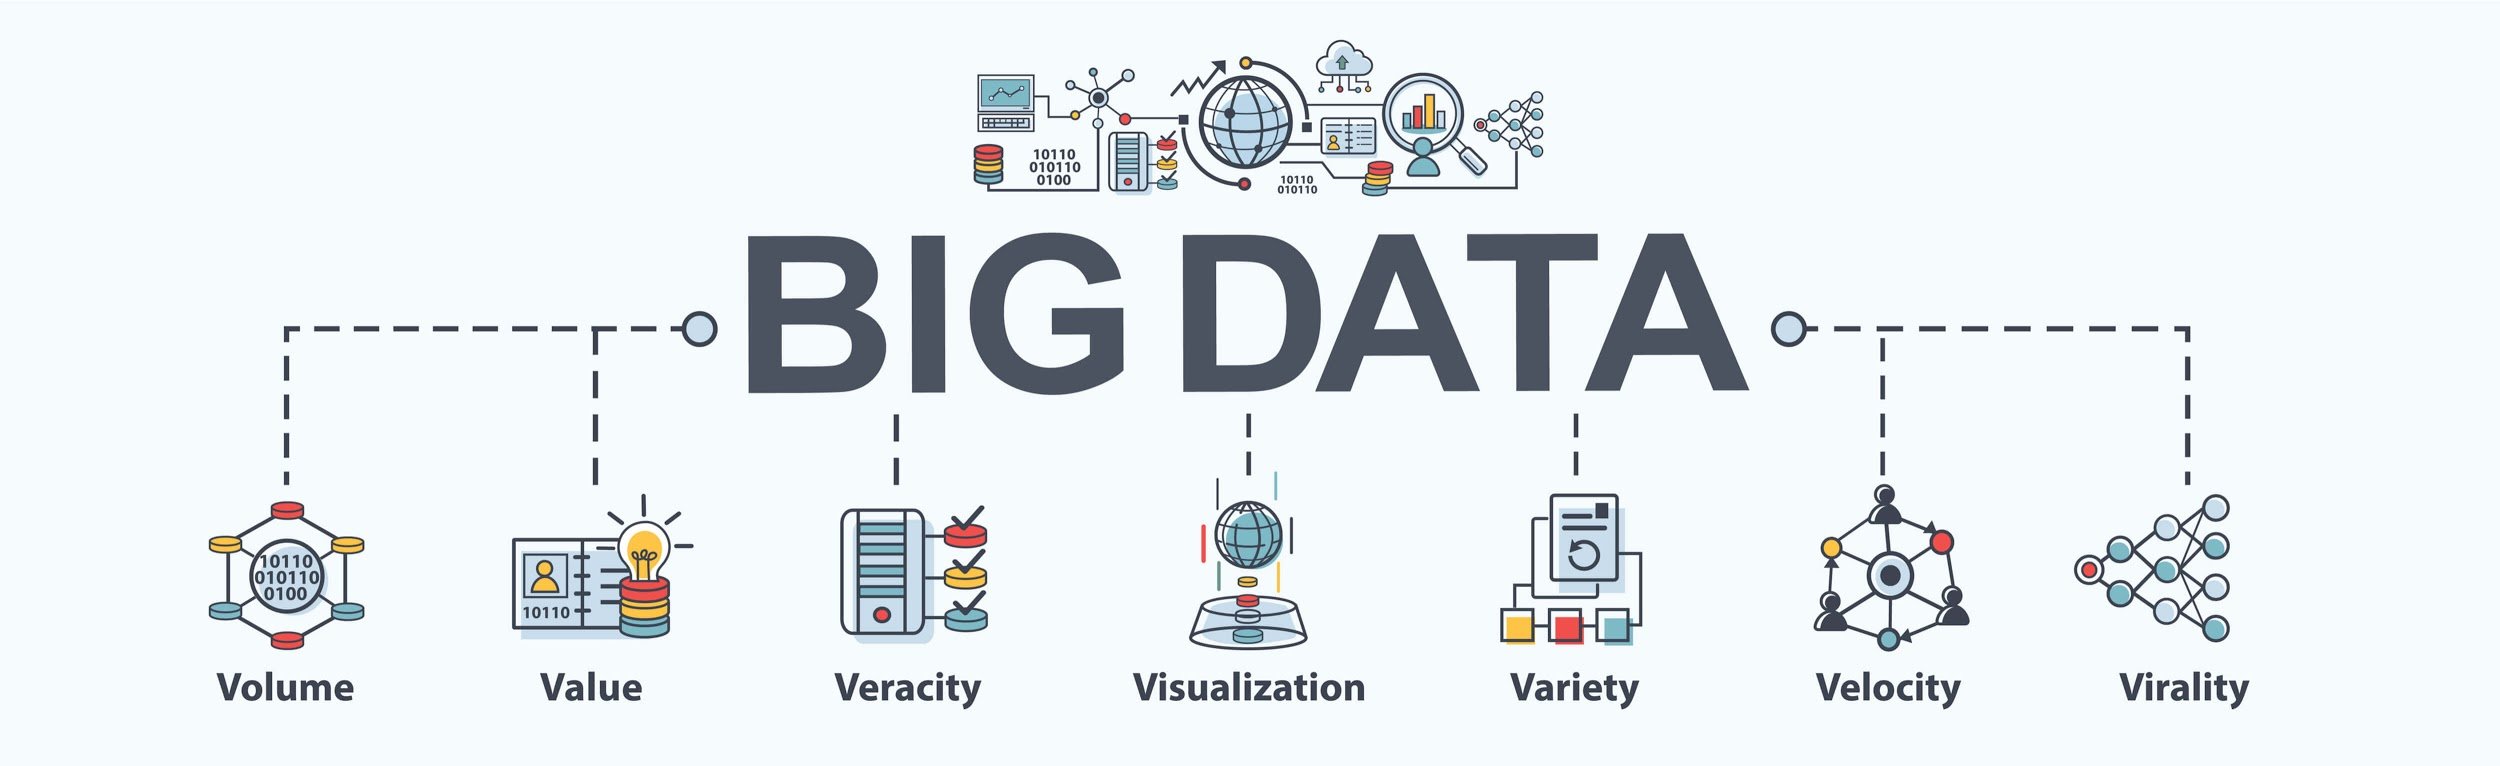 big data e suas características